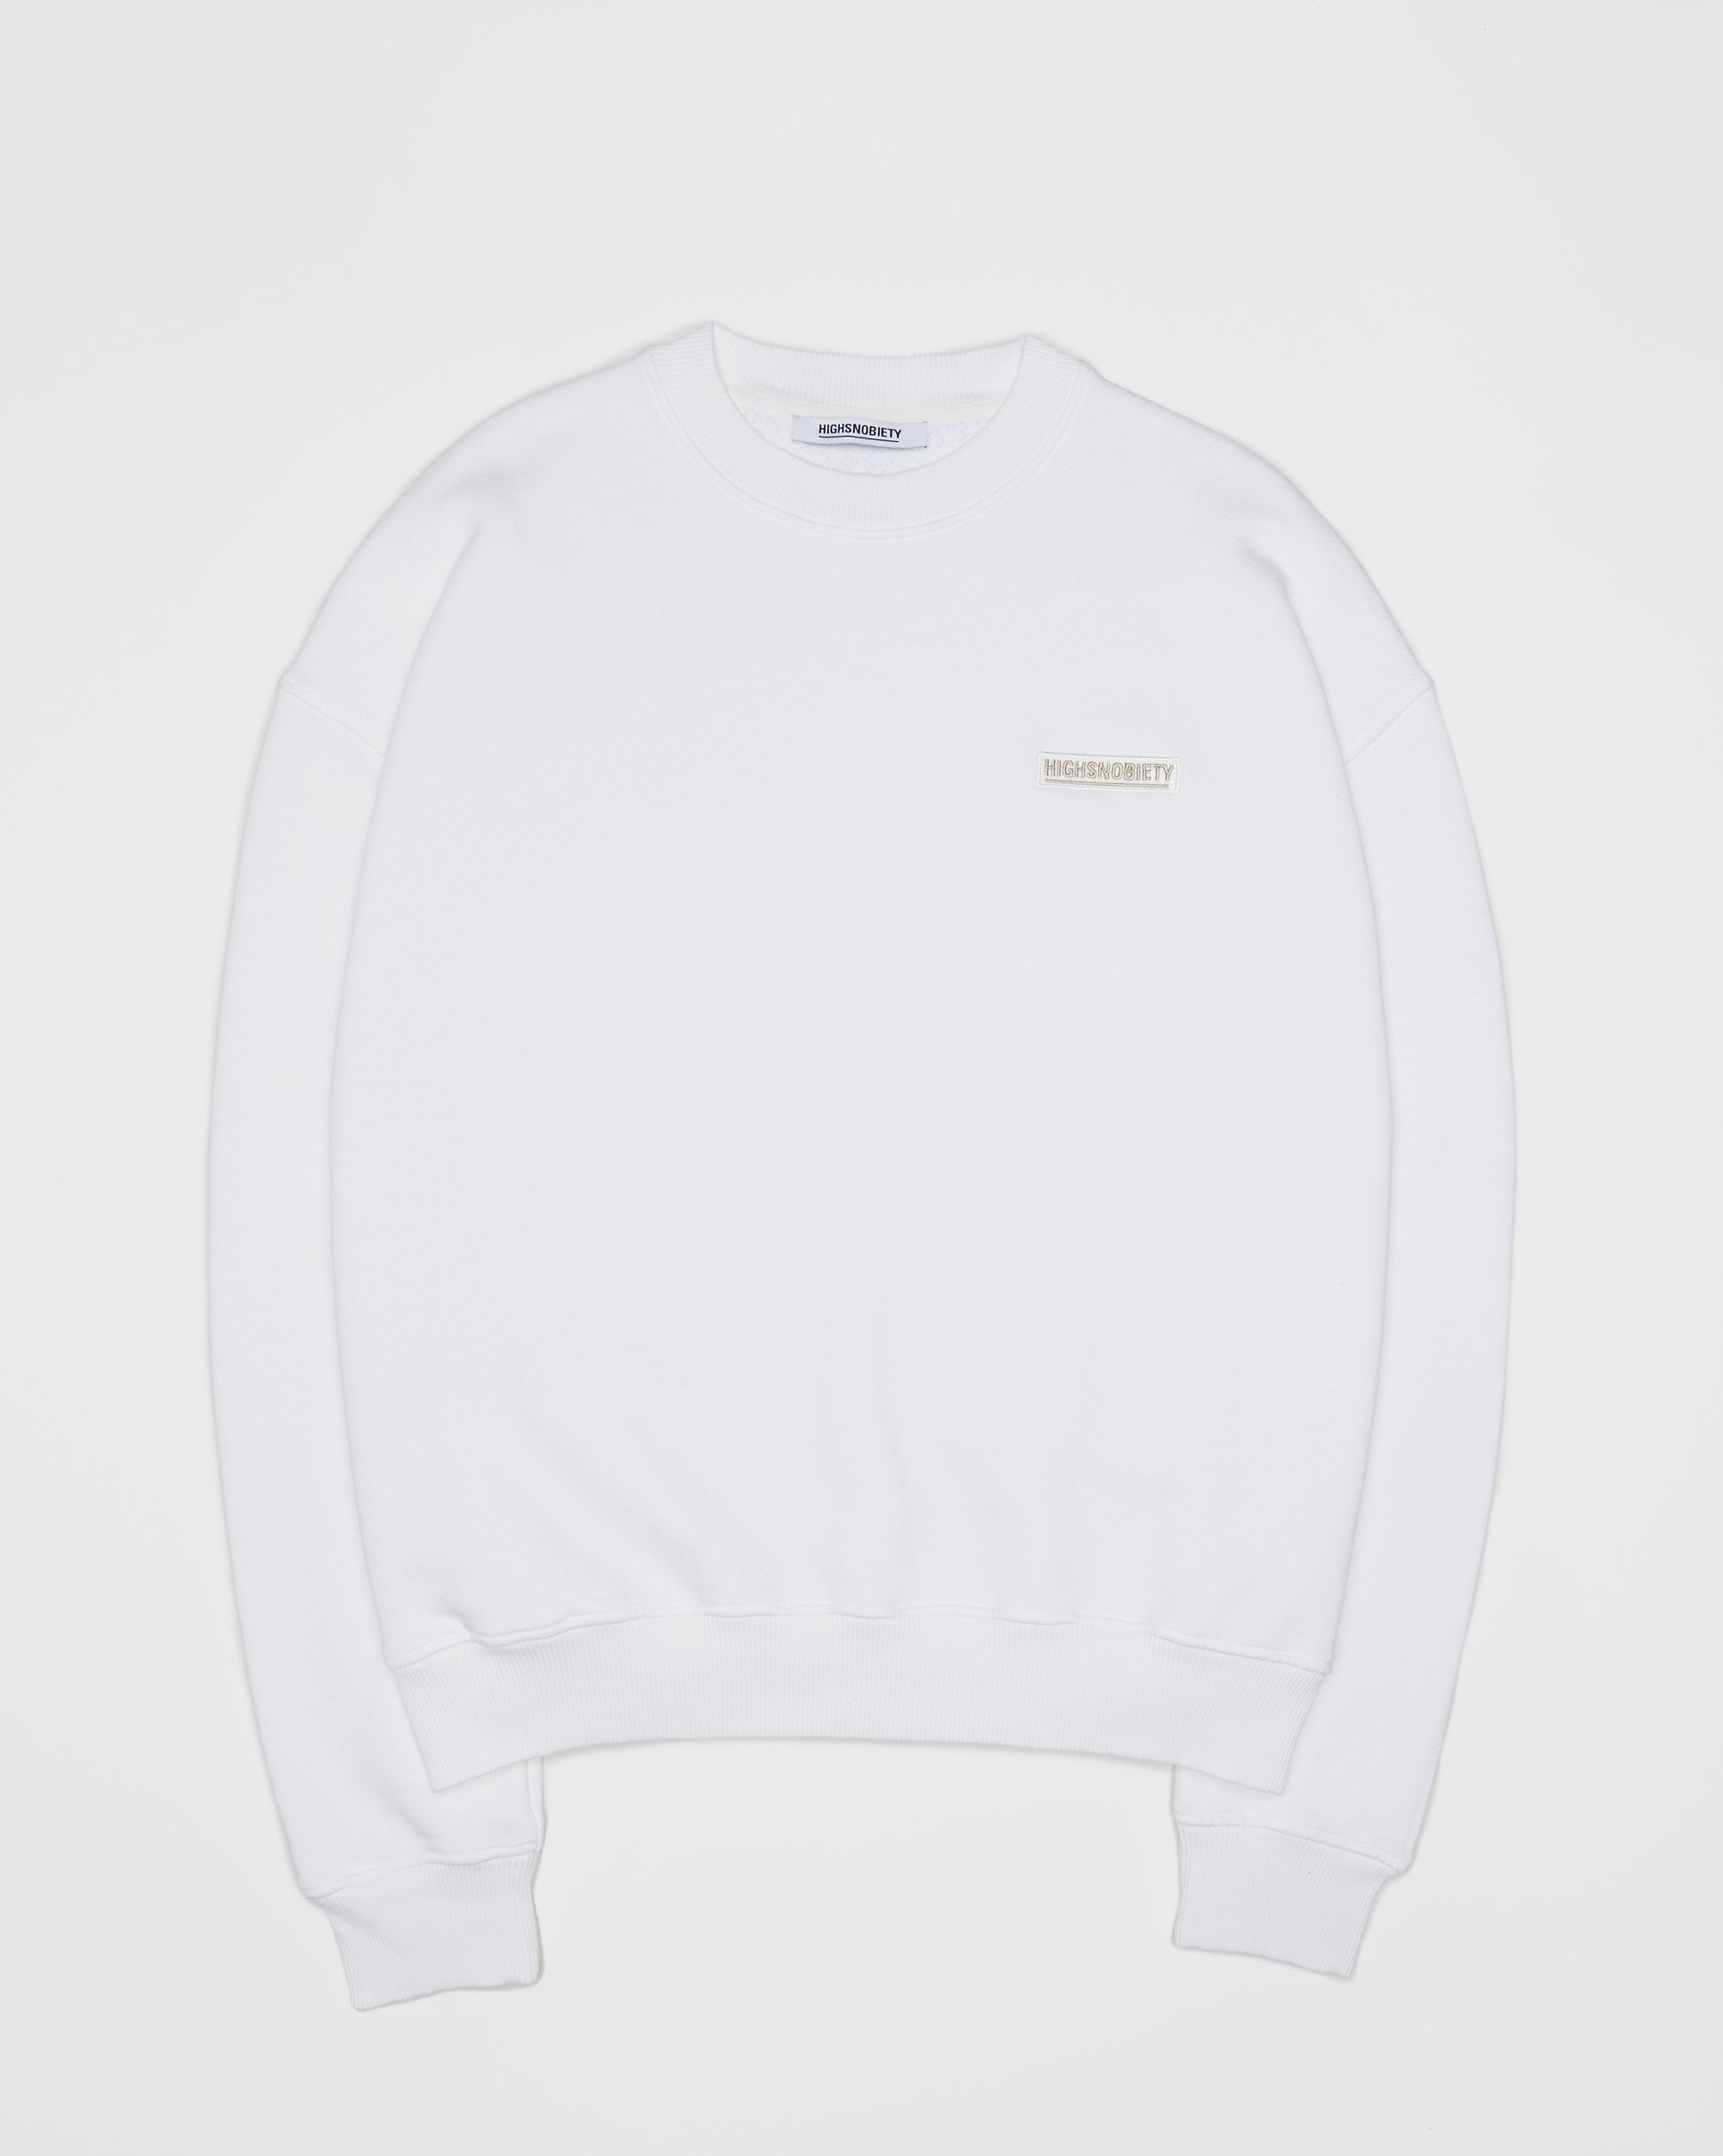 Highsnobiety - Staples Sweatshirt White - Clothing - White - Image 1